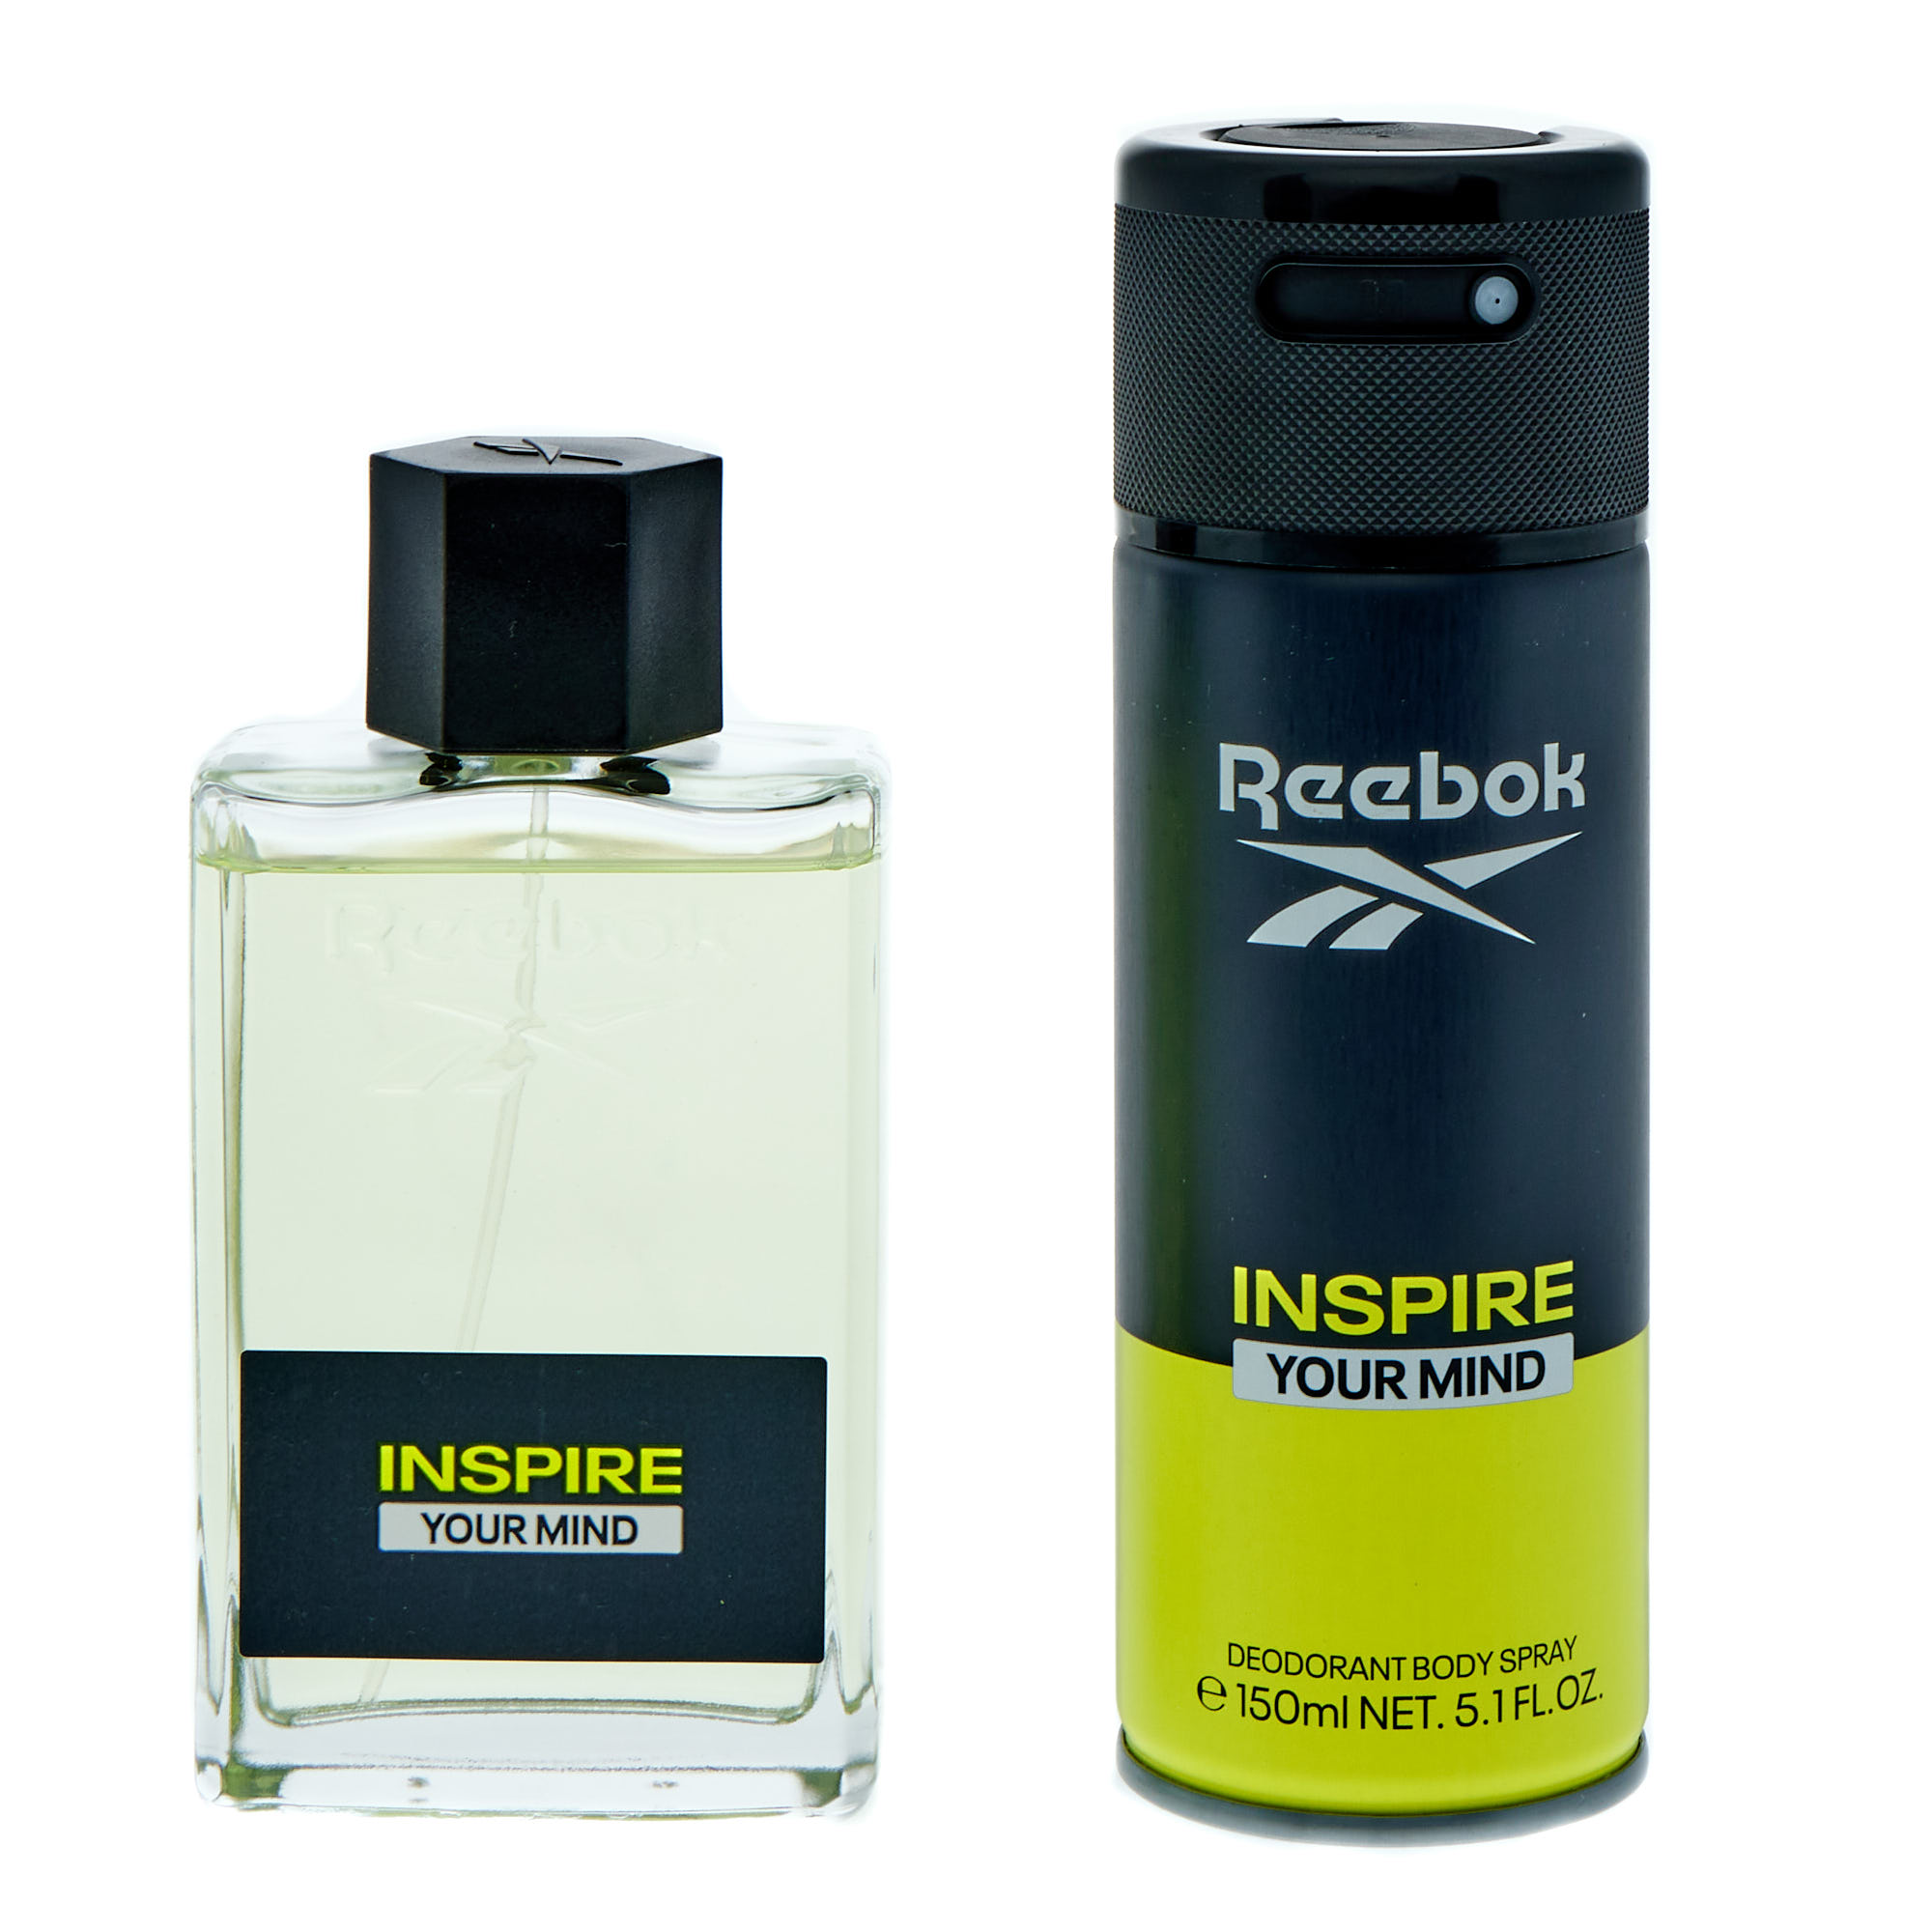 Reebok Inspire Your Mind Eau De Toilette & Deodorant Spray 